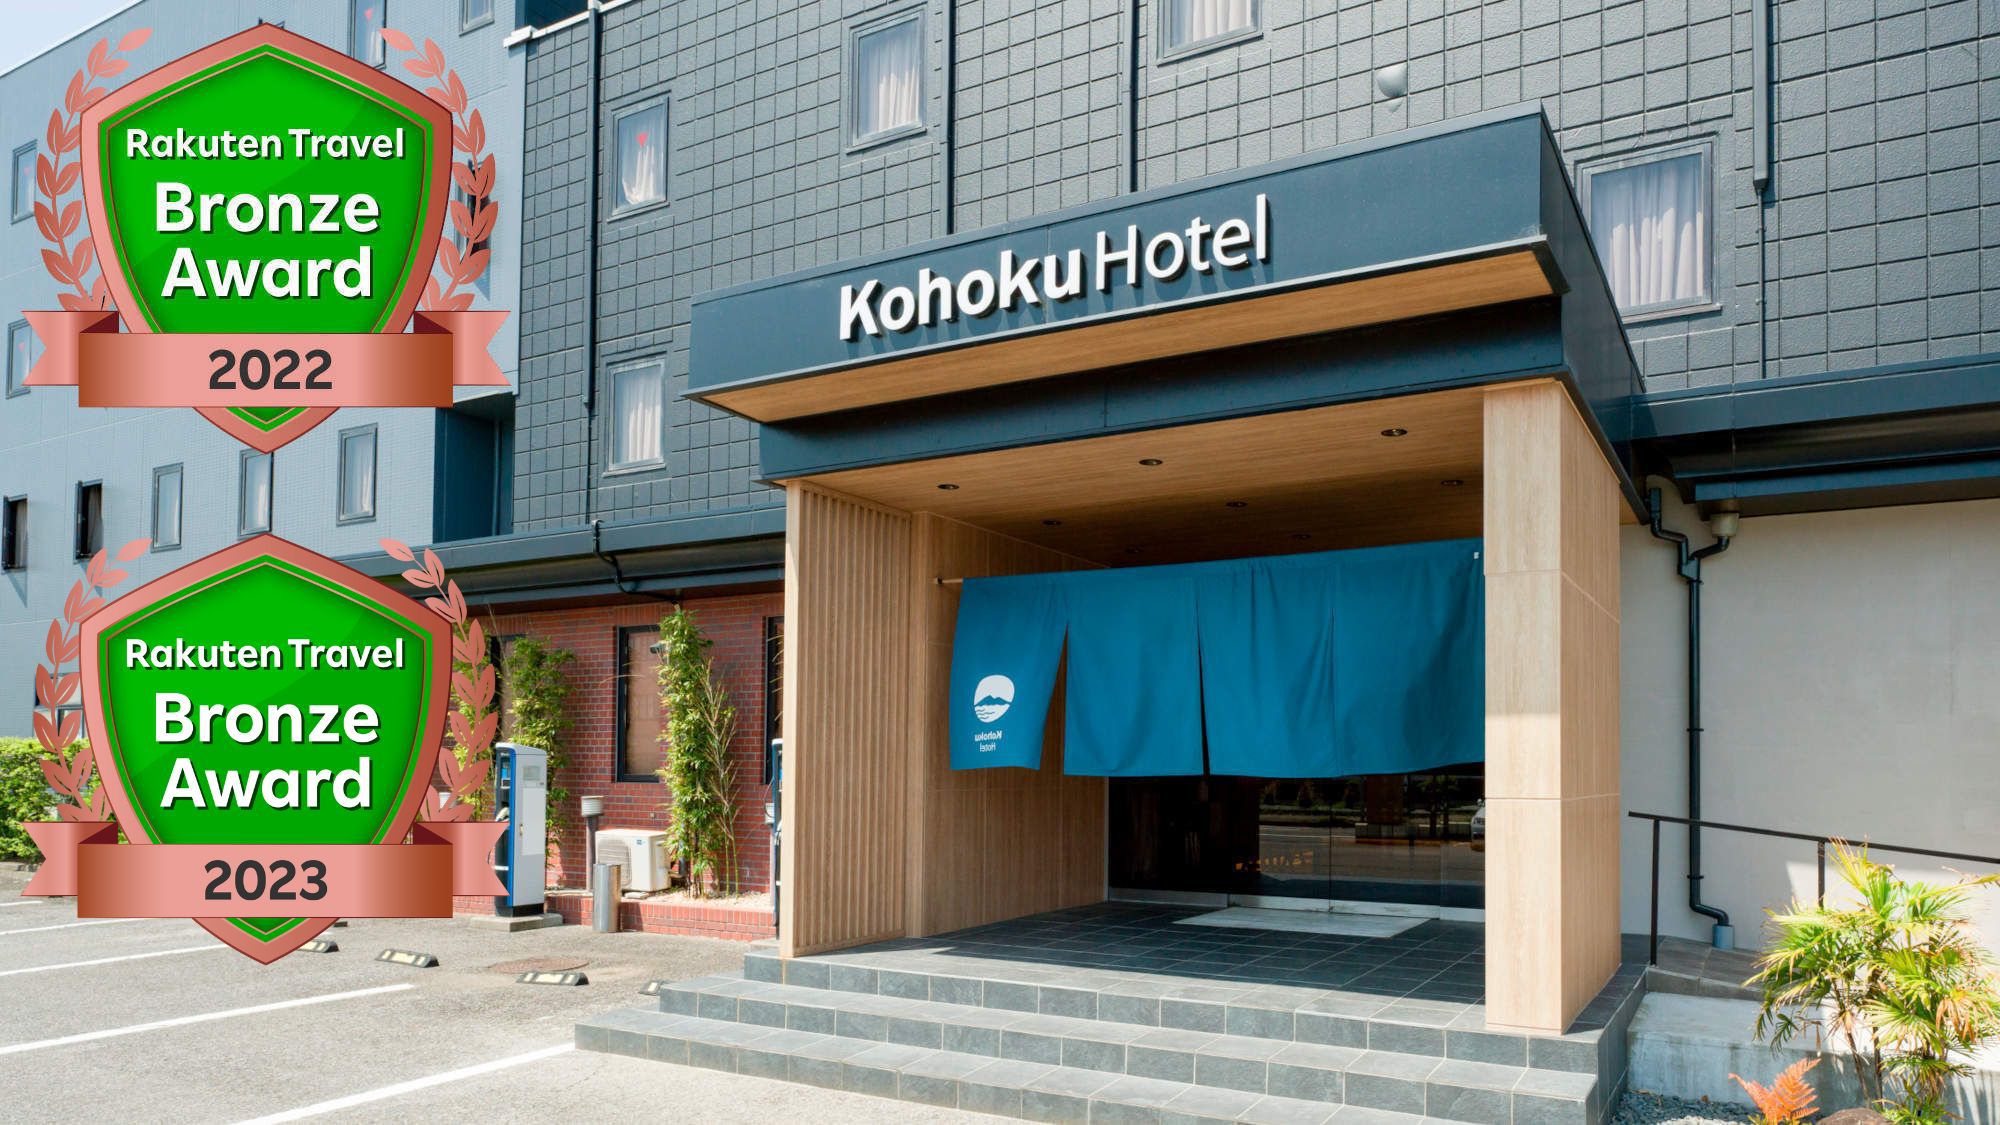 Business Hotel Kohoku